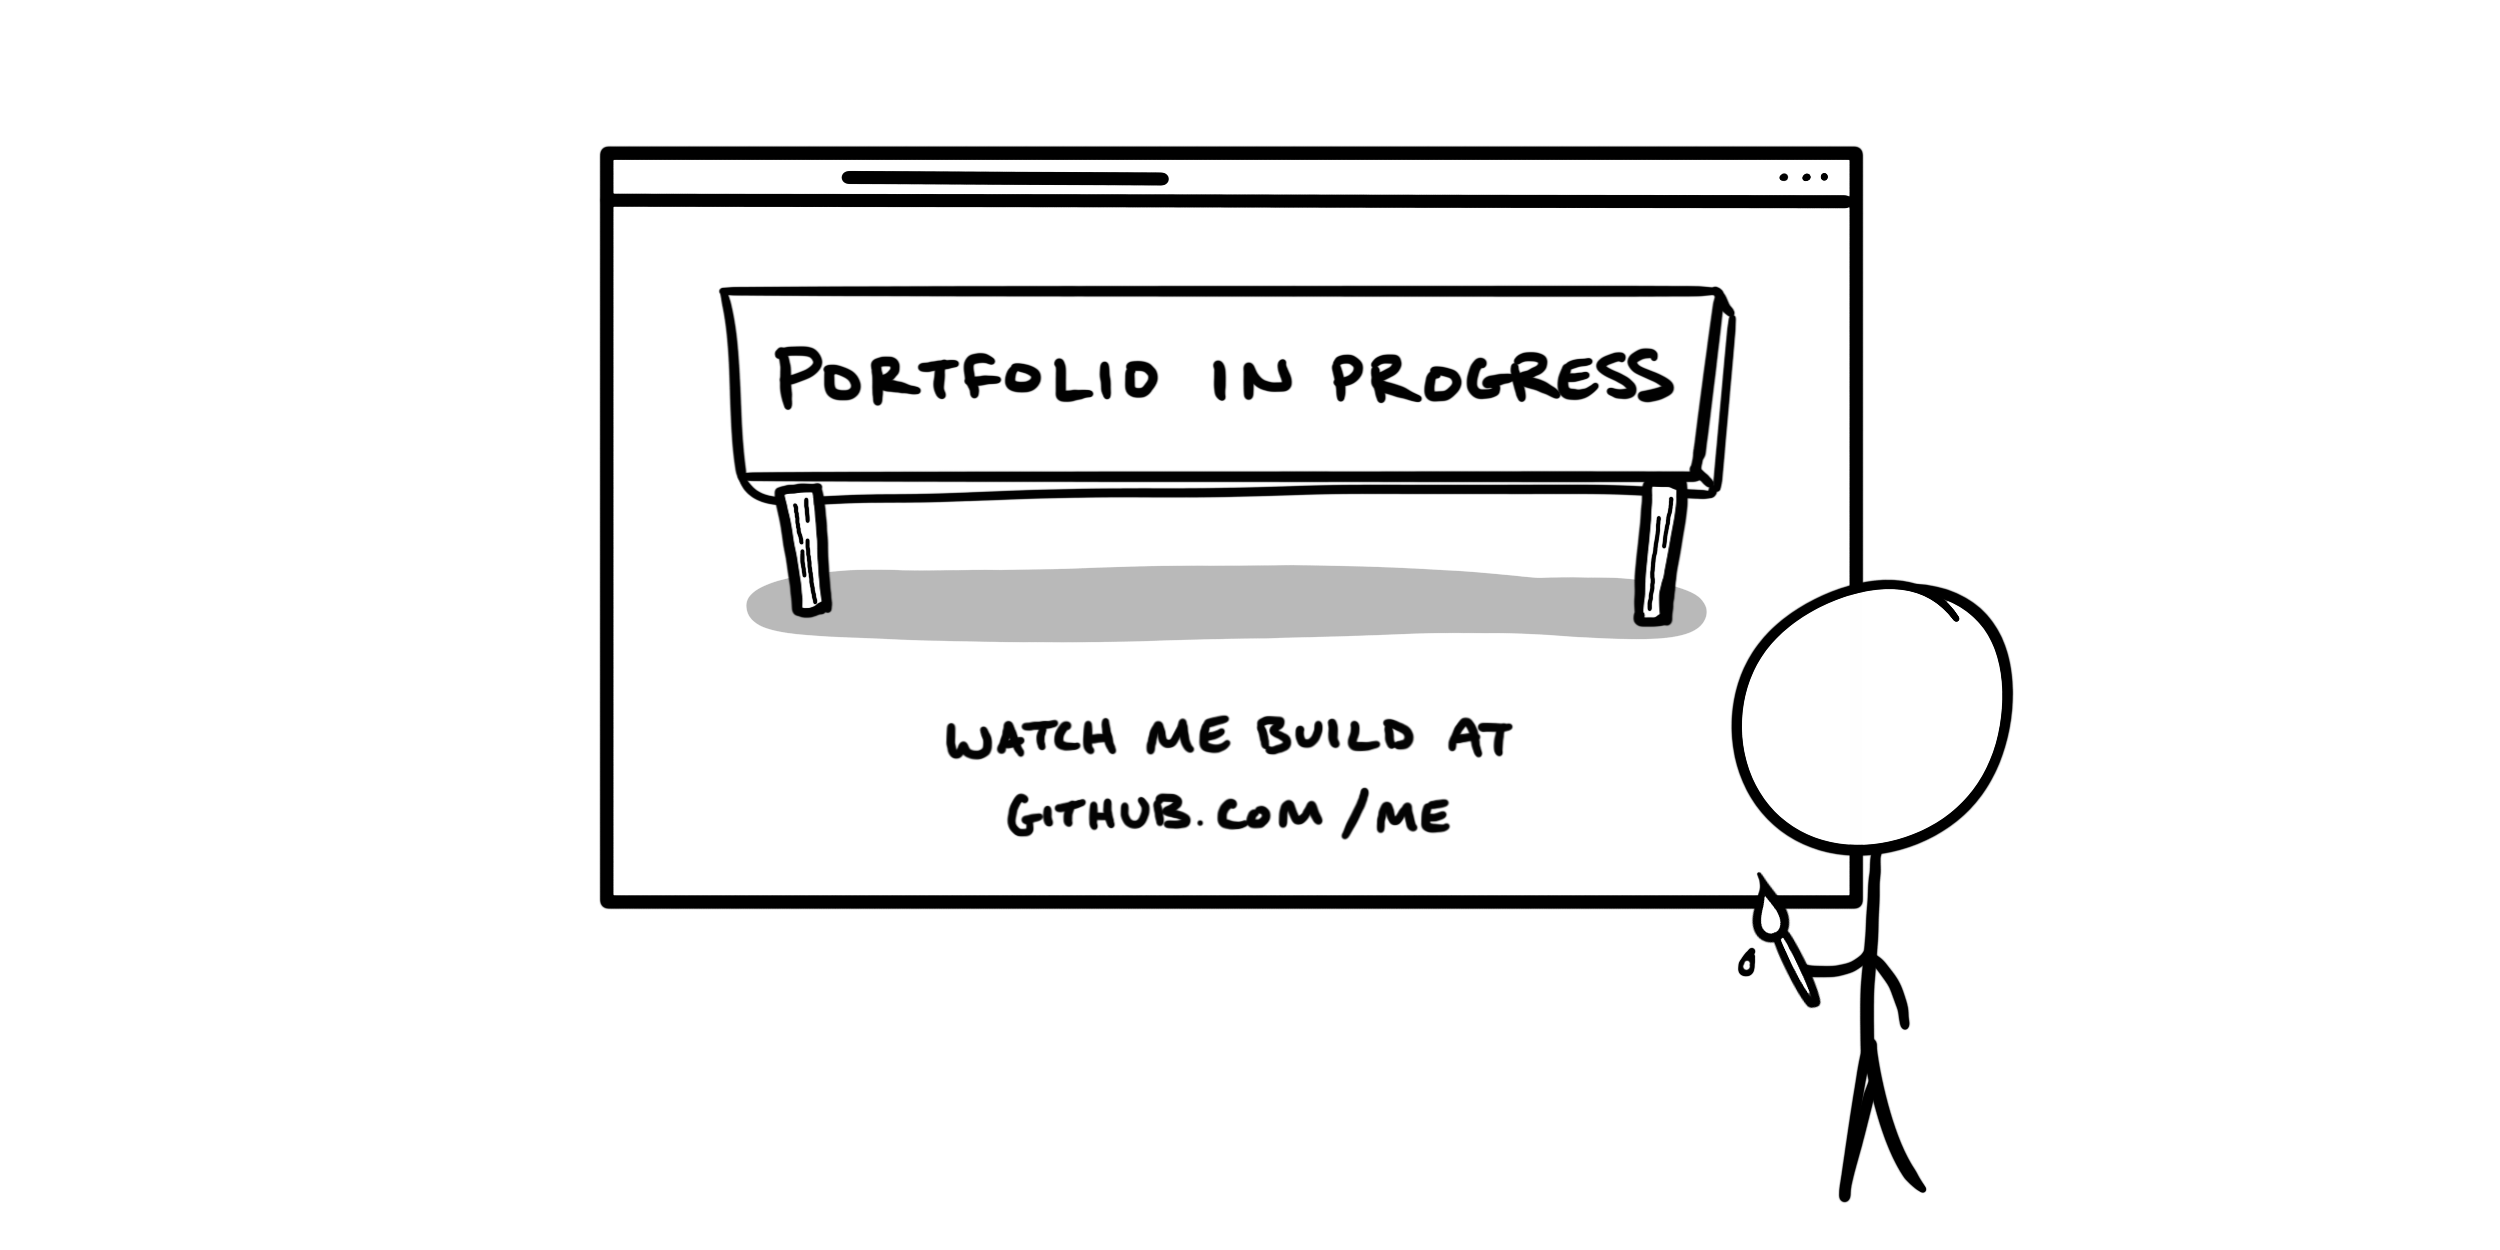 A comic of an in-progress portfolio, text reads, &ldquo;Portfolio in progress. Watch me build at GitHub.com/me&rdquo;